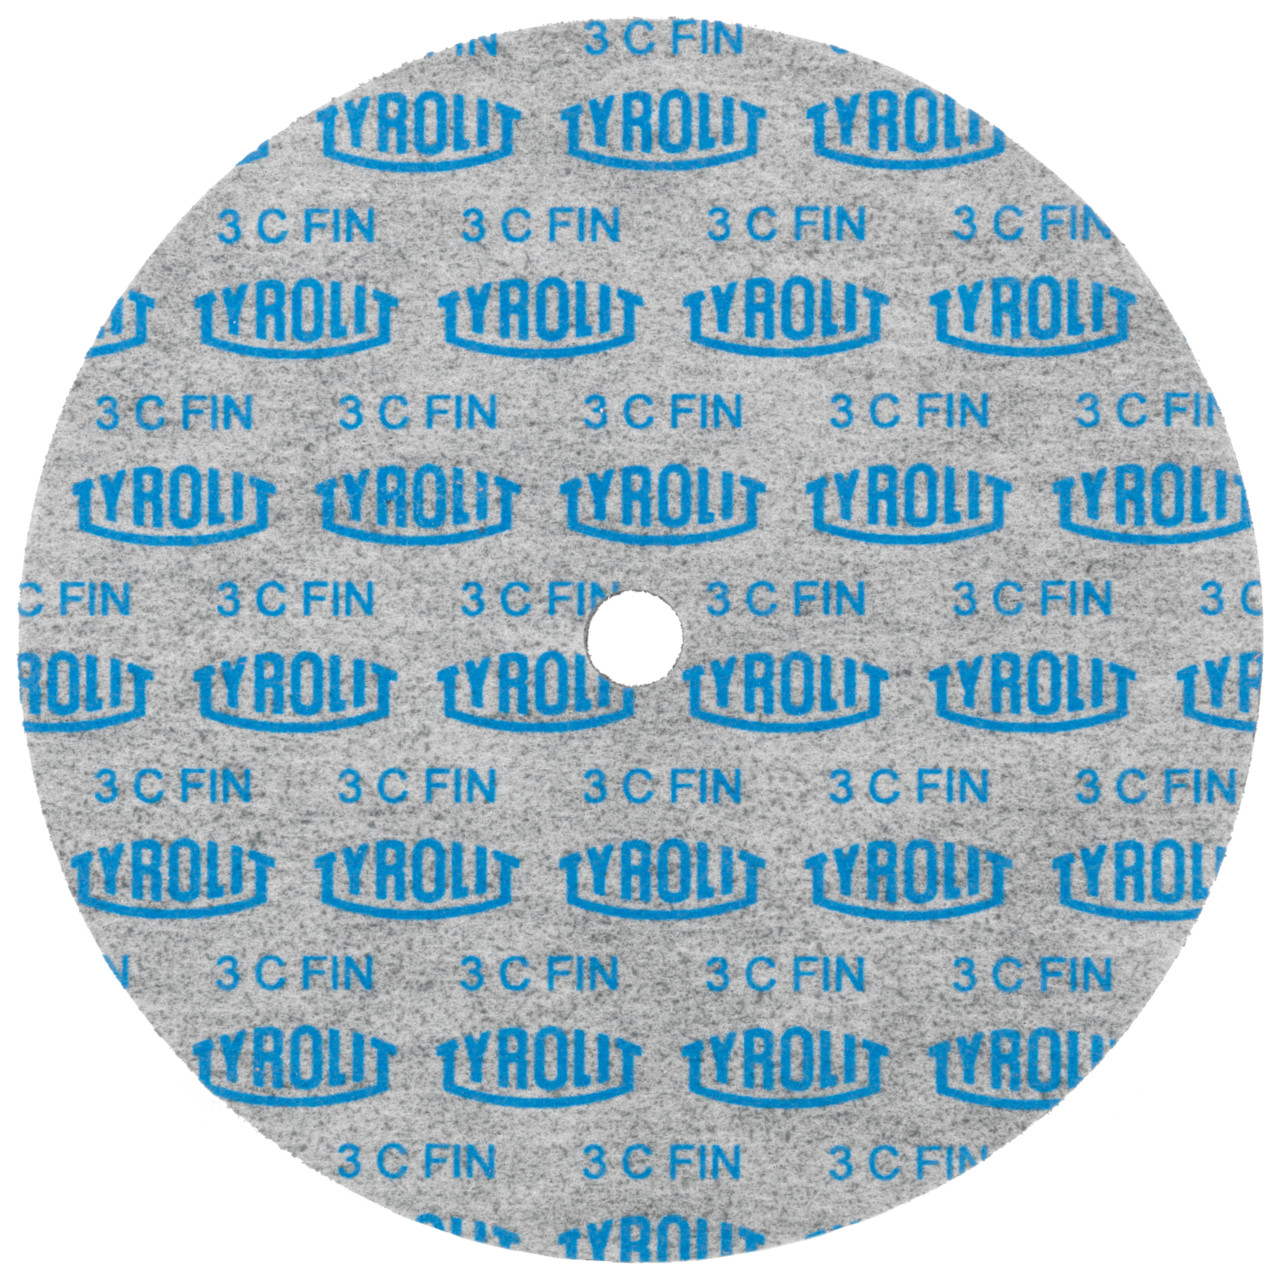 Tyrolit Discos compactos prensados DxDxH 152x25x12,7 Inserto universal, 2 C FEIN, forma: 1, Art. 34190298